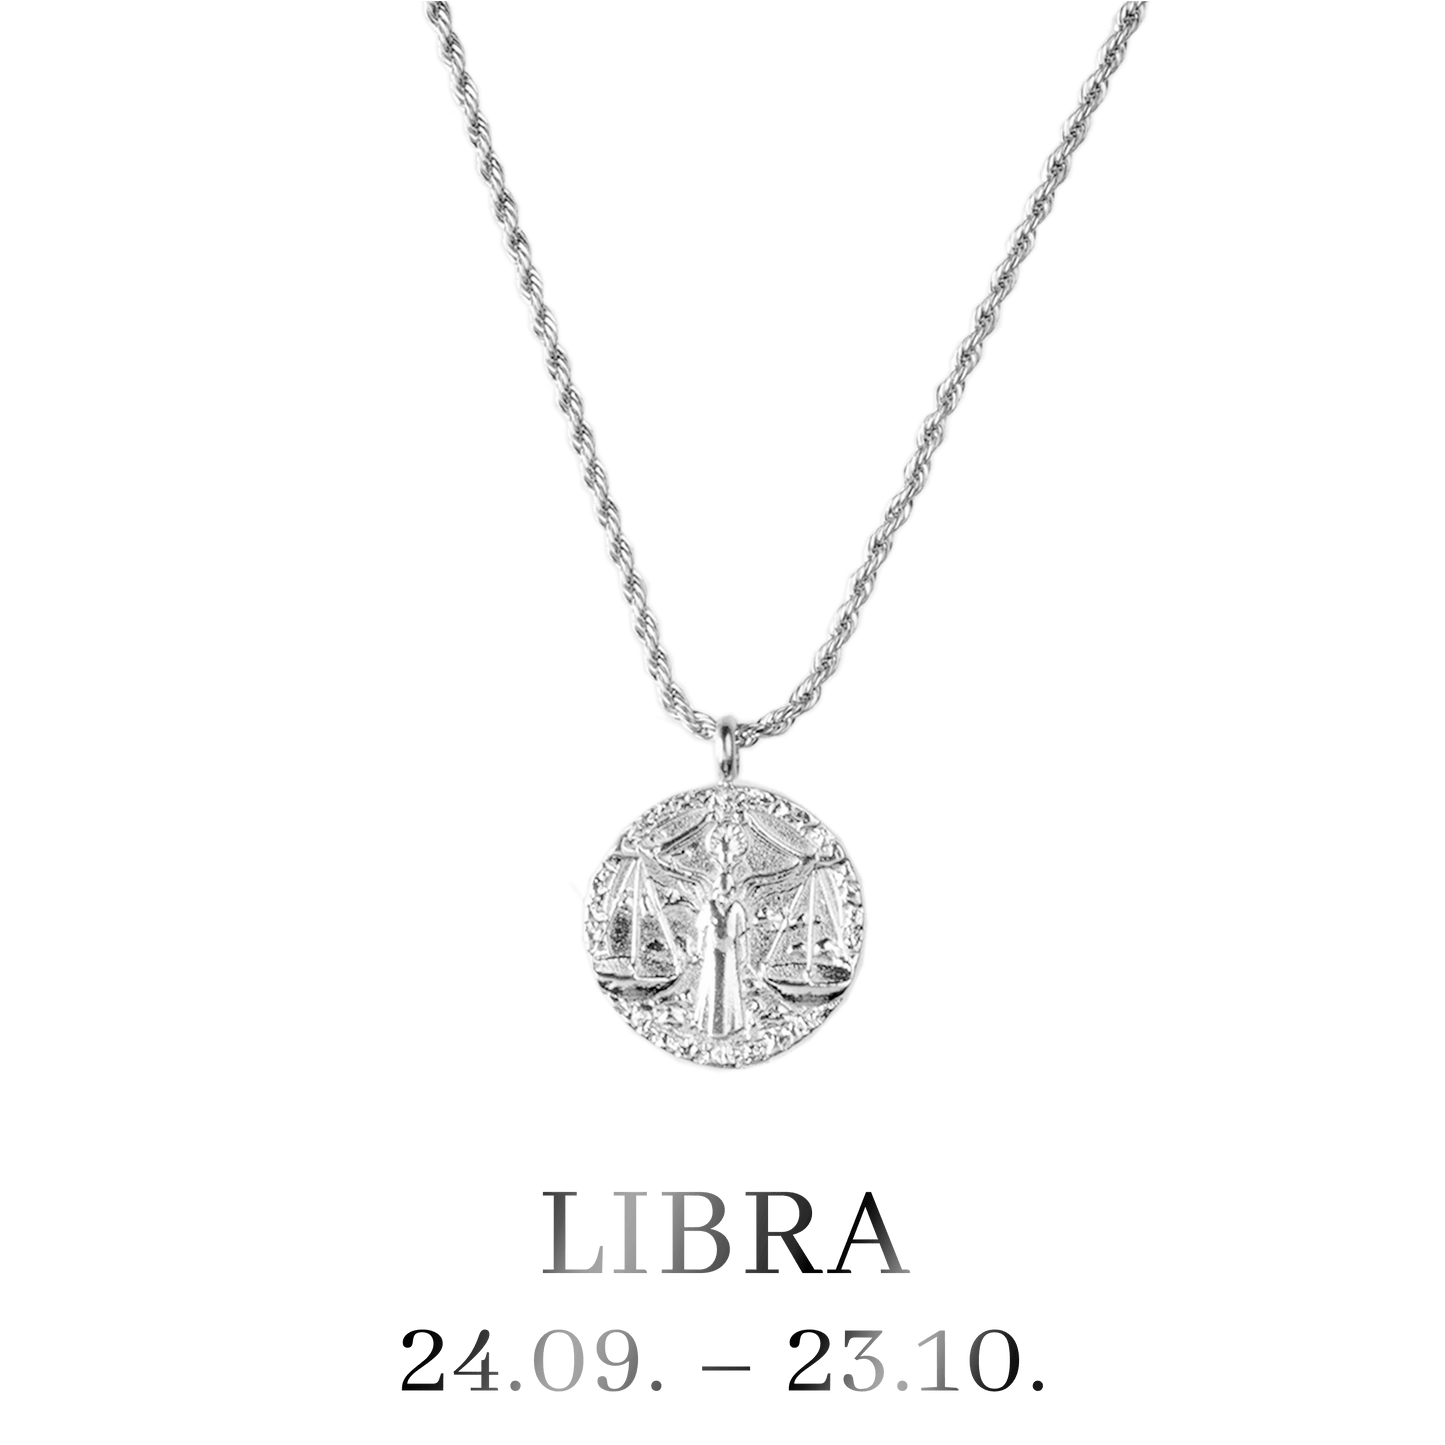 Libra Necklace Silver